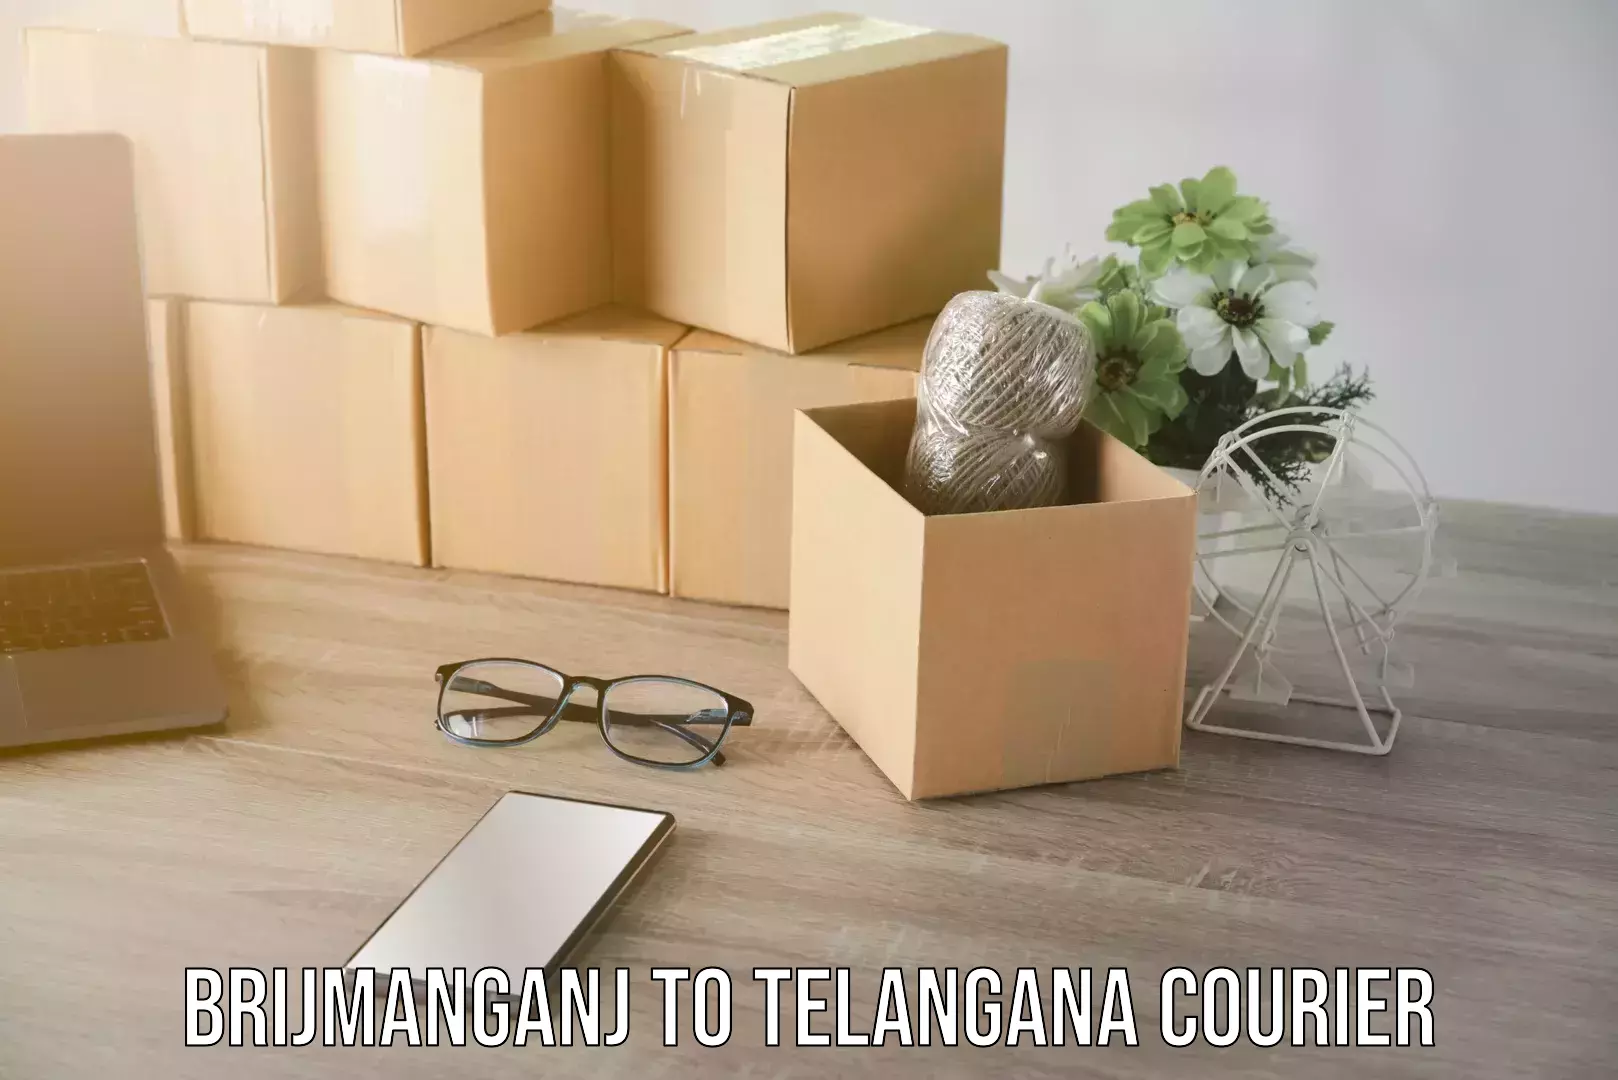 Bulk courier orders Brijmanganj to Telangana